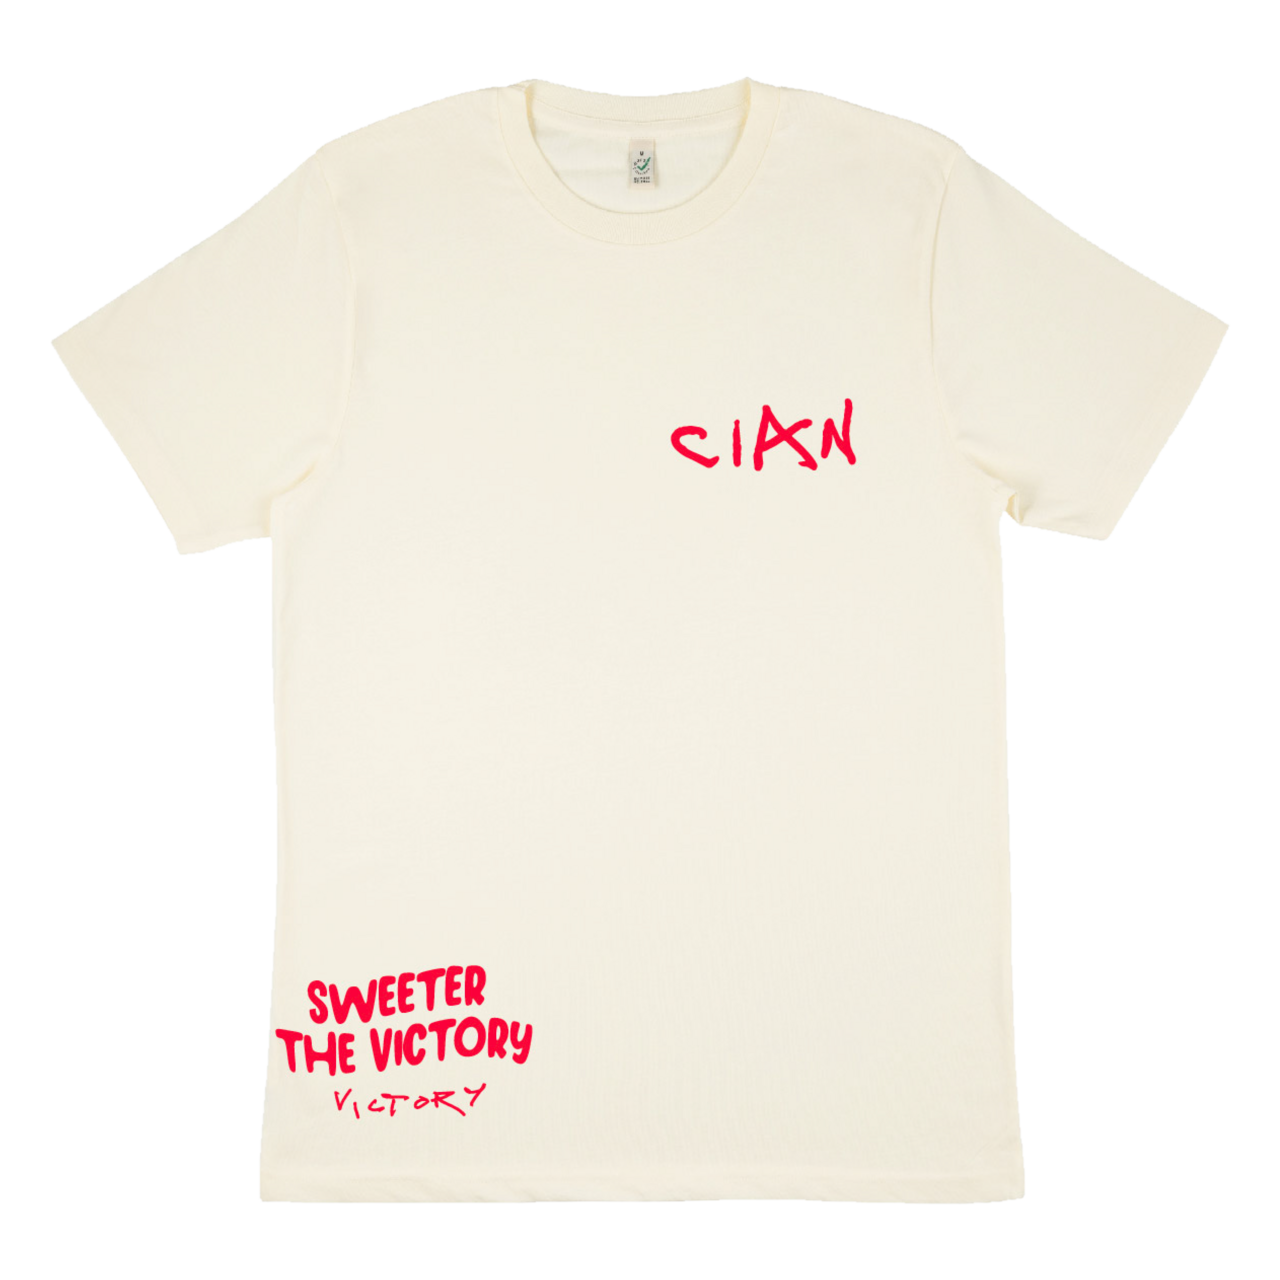 Cian Ducrot - Cian Ducrot T-Shirt